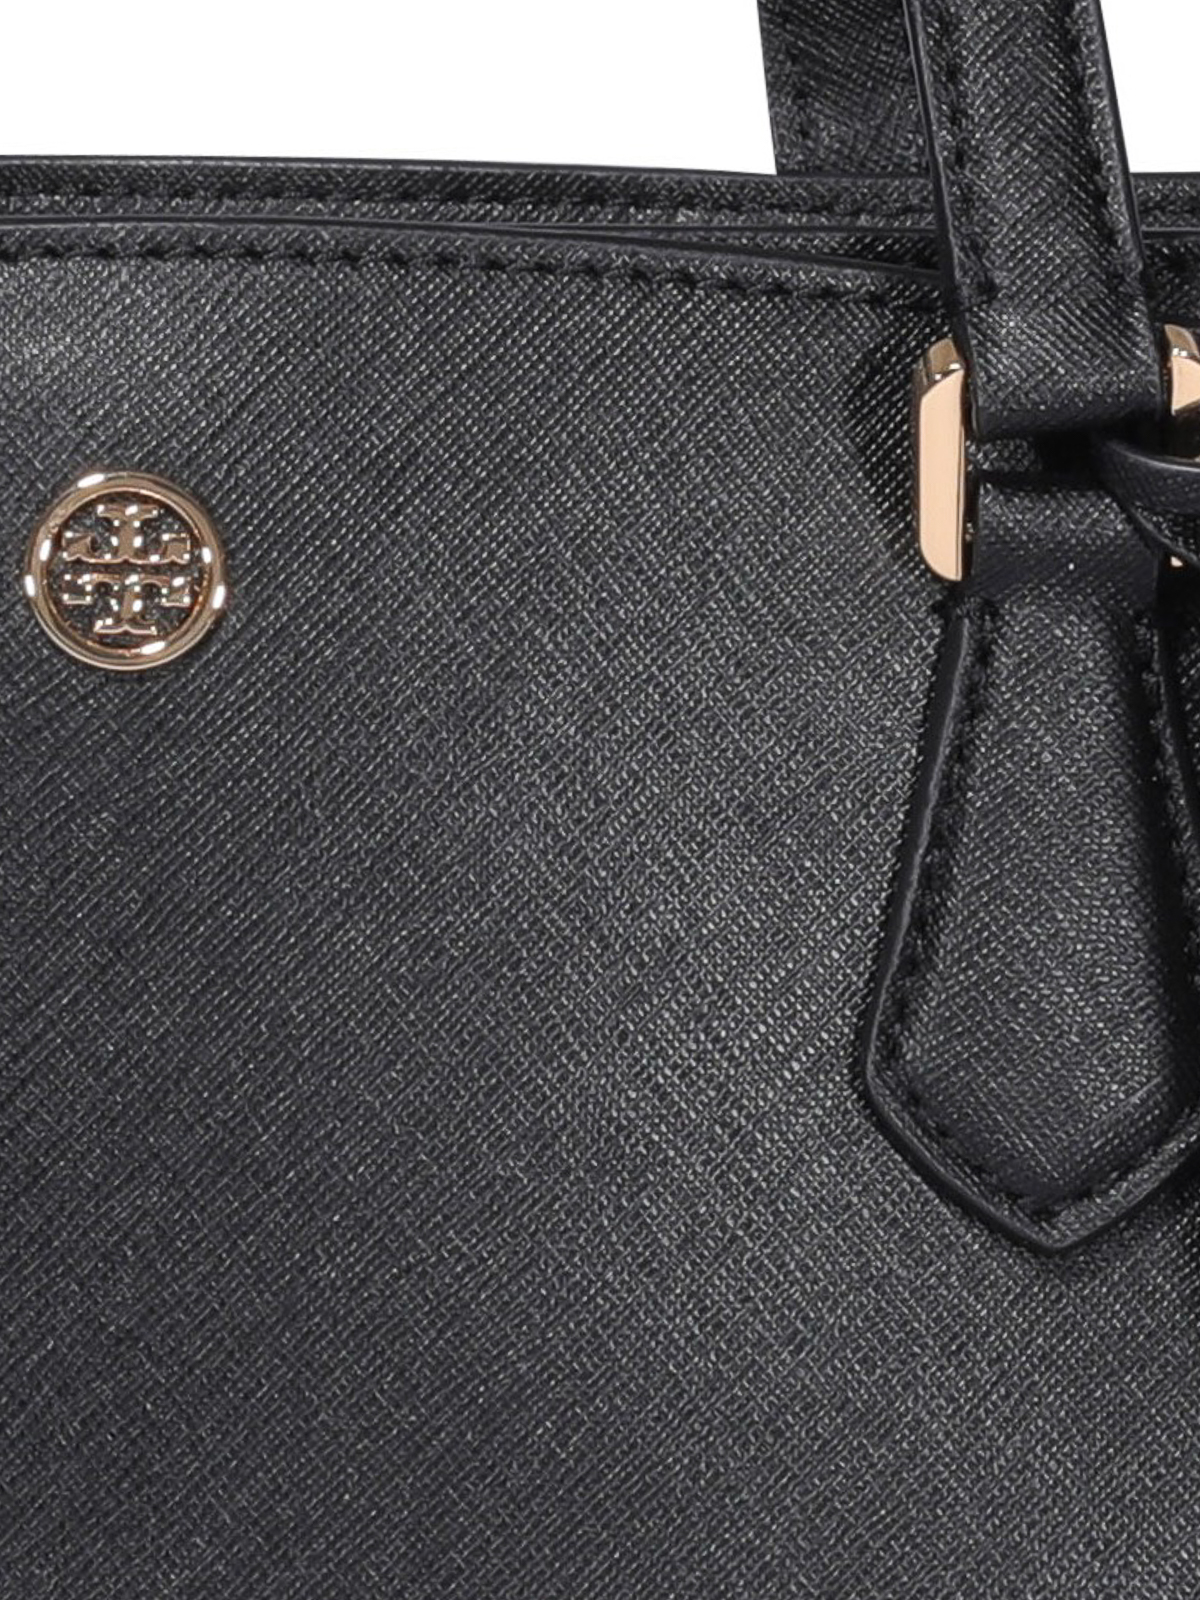 Bag brand kshop - Tory Burch ROBINSON SMALL TOP-HANDLE